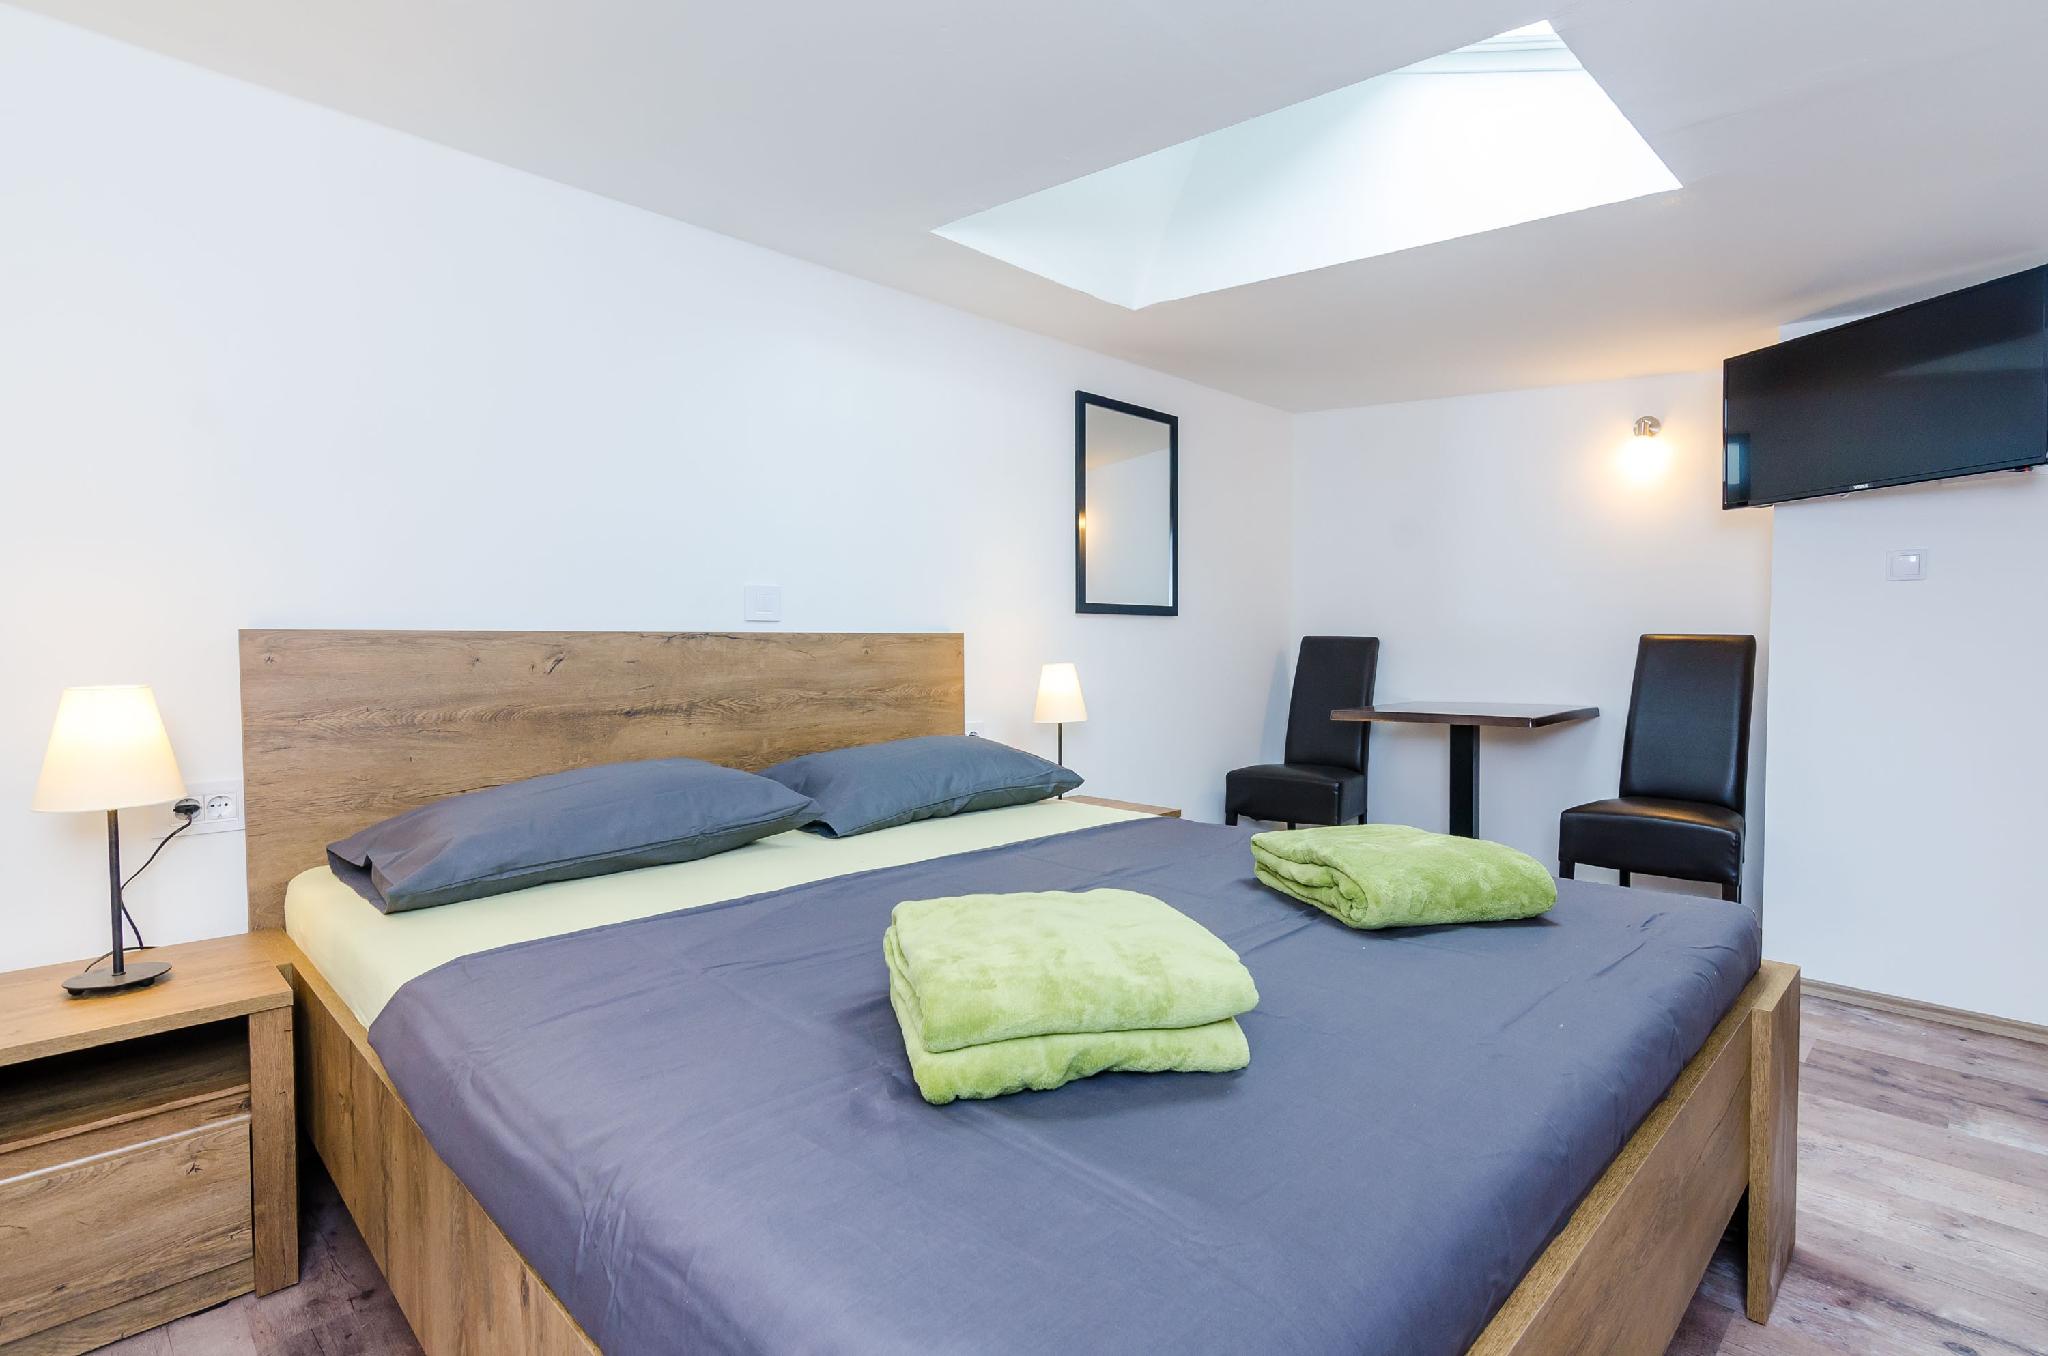 Rooms Baza-Dubrovnik Updated 2022 Room Price-Reviews & Deals | Trip.com